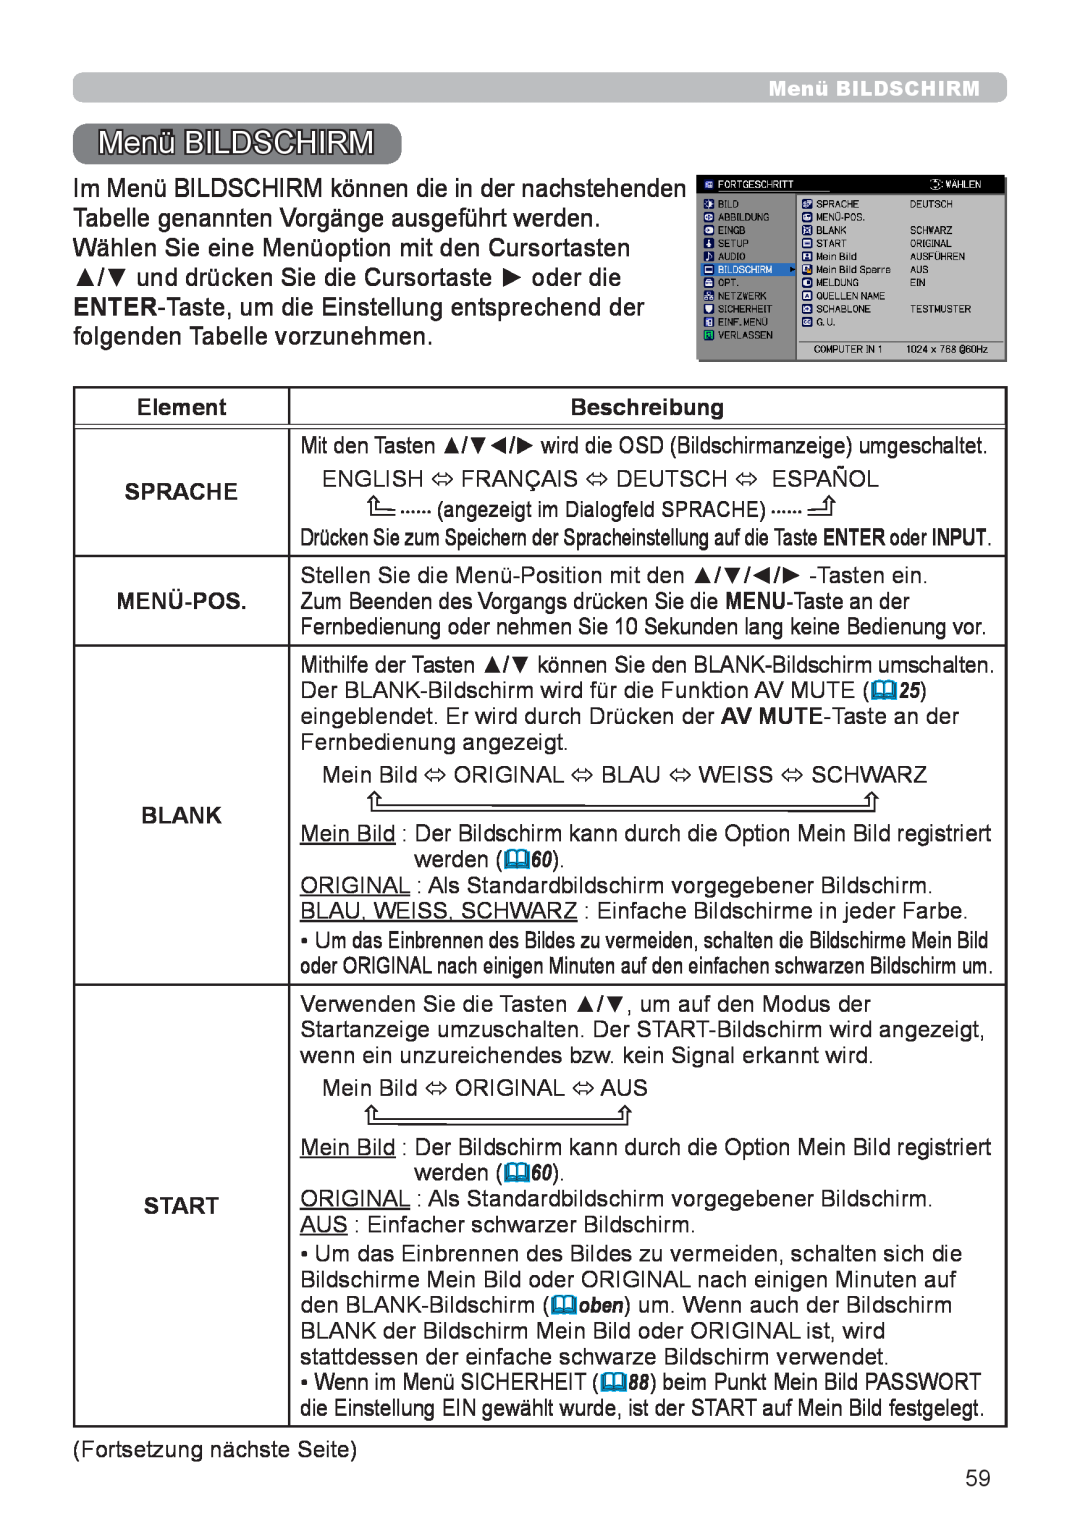 InFocus IN5132 user manual Menü BILDSCHIRM, Element, Beschreibung, Sprache, Menü-Pos, Blank, Start 